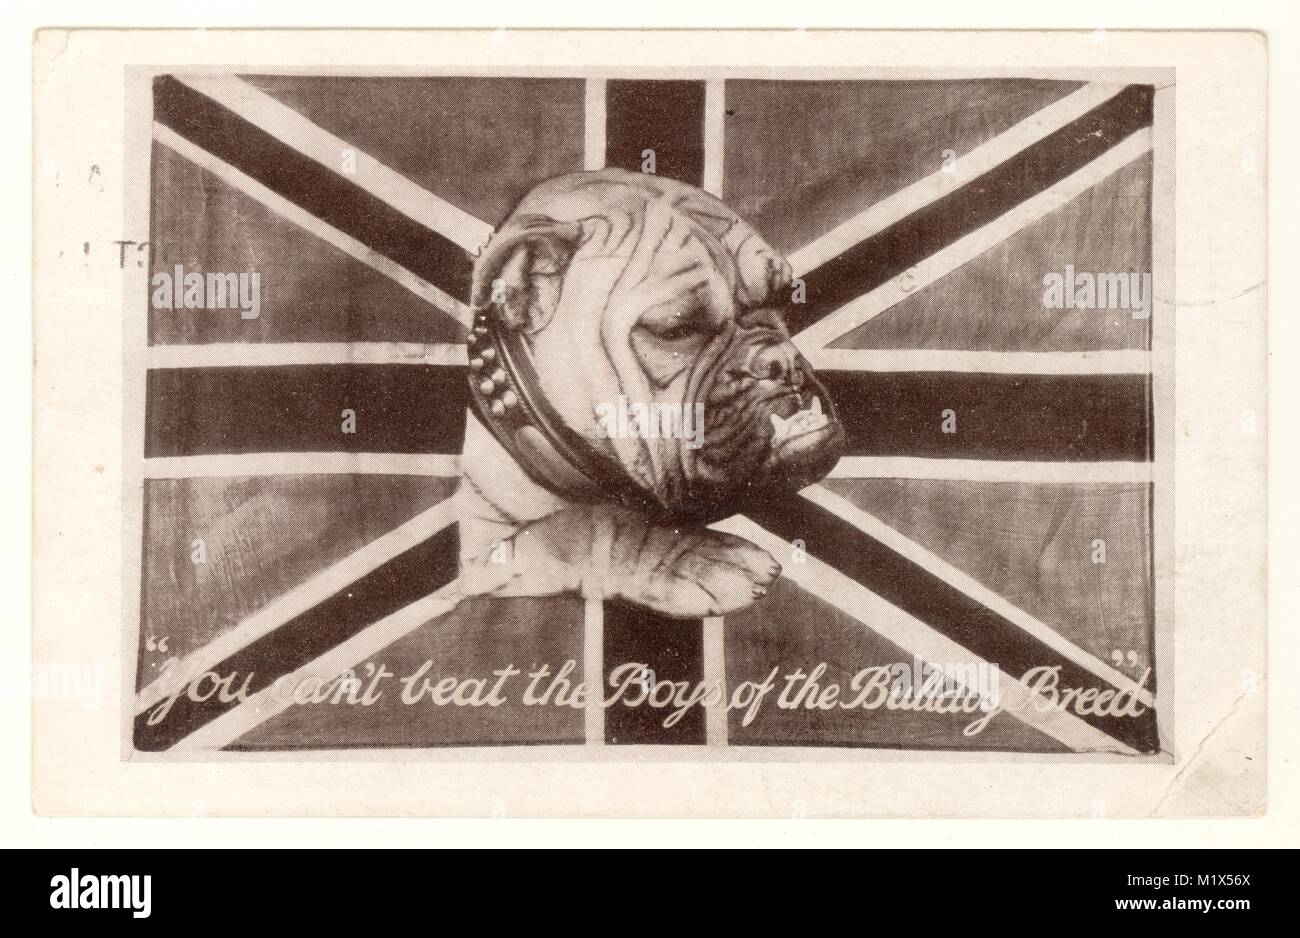 WW1 patriotic bulldog card 'You can't beat the boys of the bulldog breed', dated 3 Oct 1914, U.K. Stock Photo